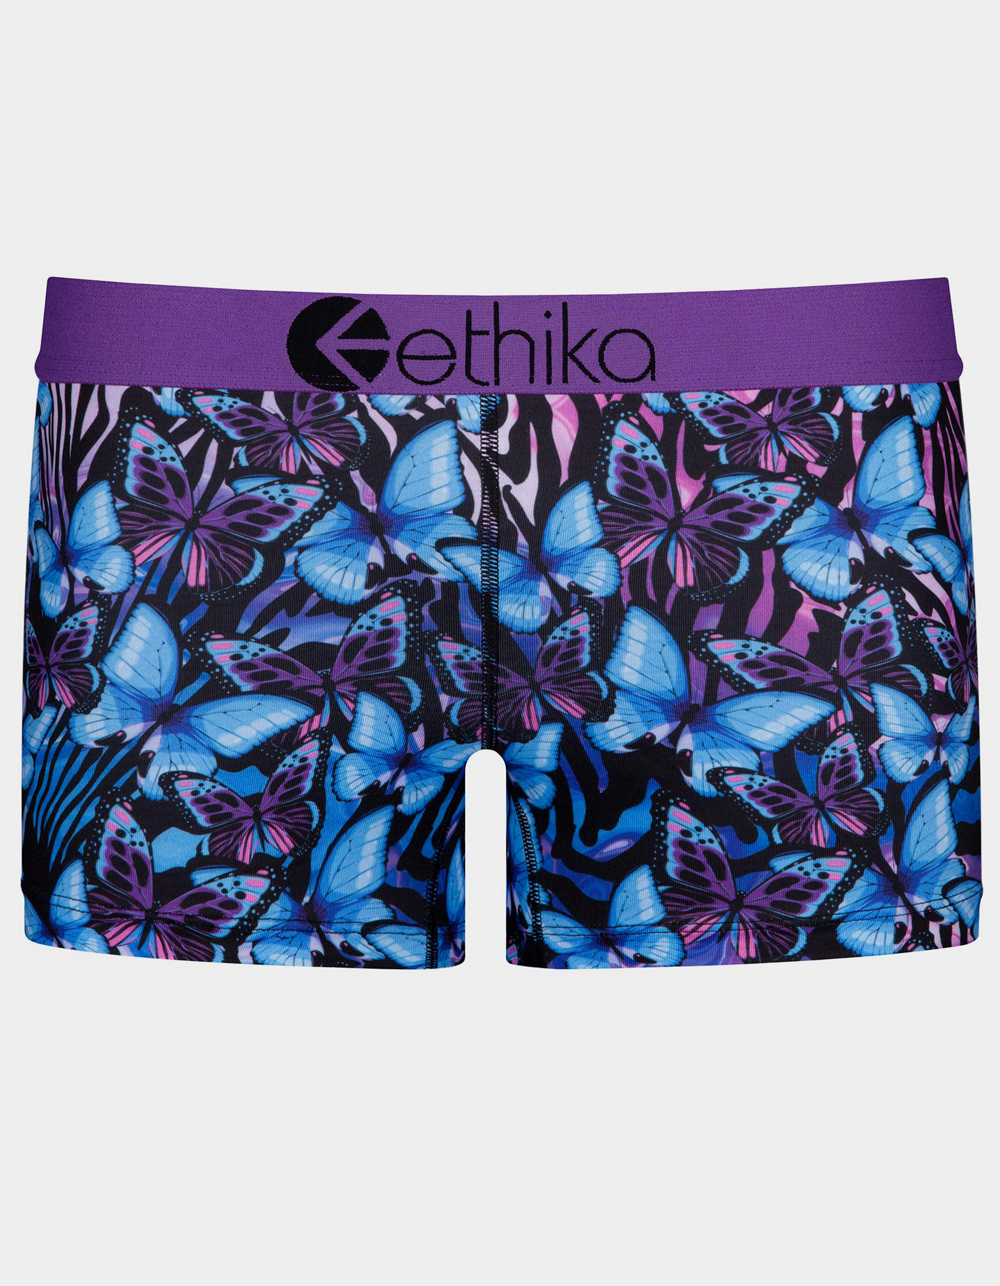 Ethika Poolside Baddie Boy Shorts